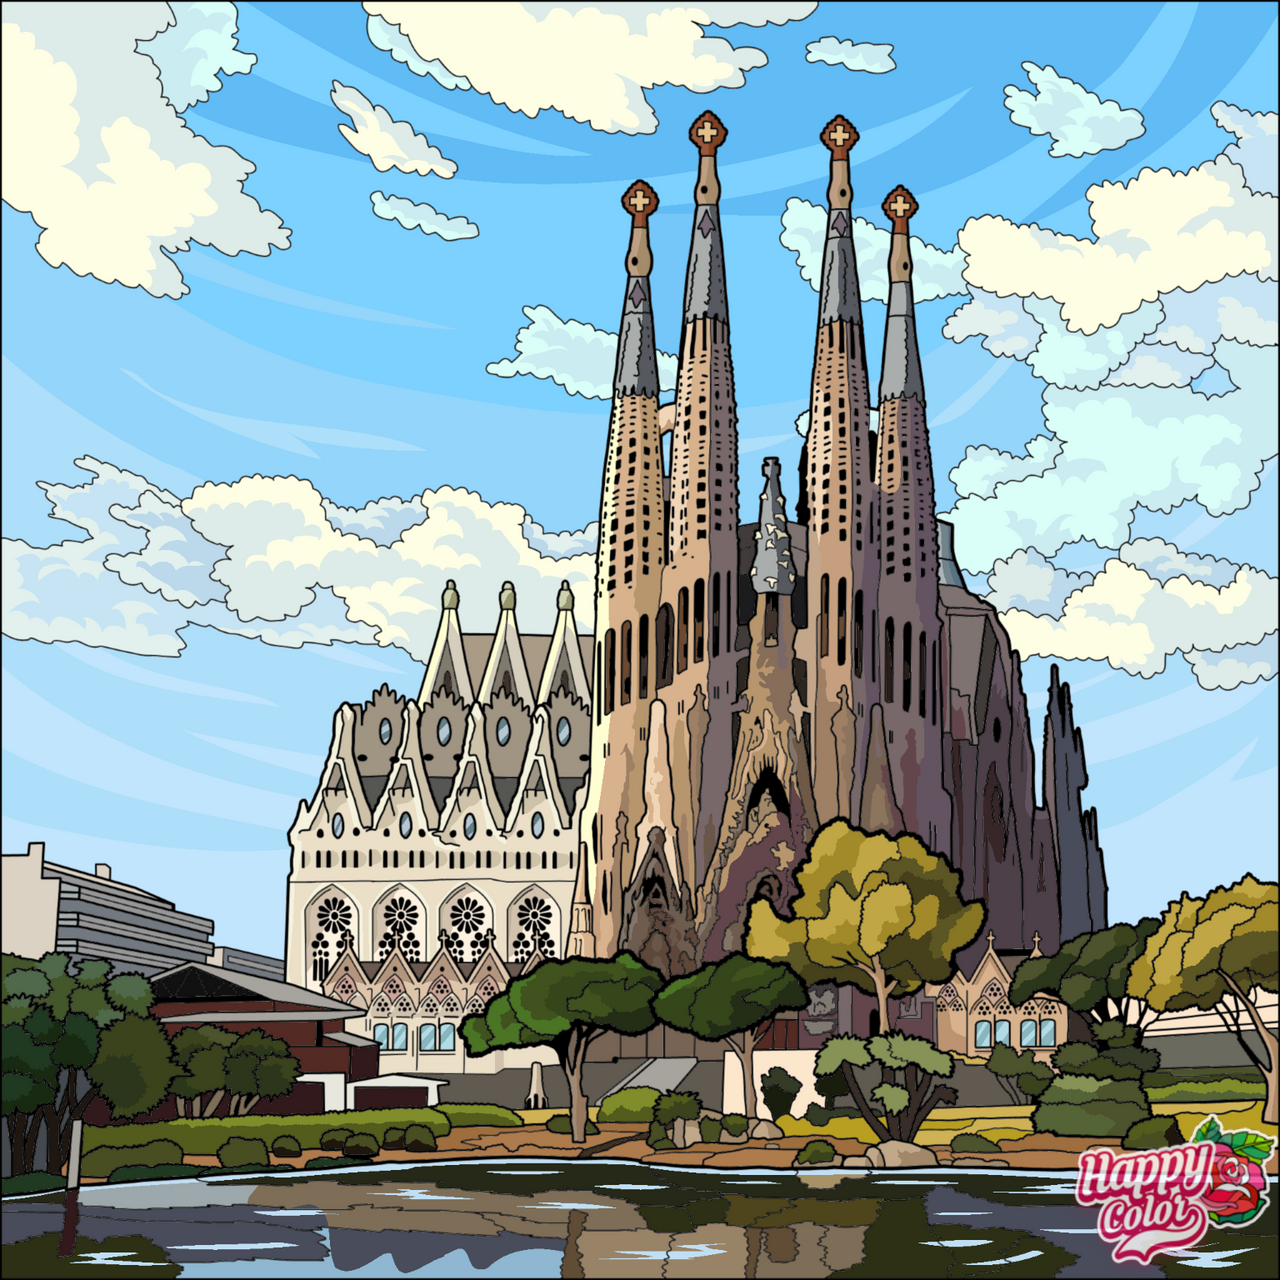 Happy Colour Sagrada Familia by Mdwyer5 on DeviantArt